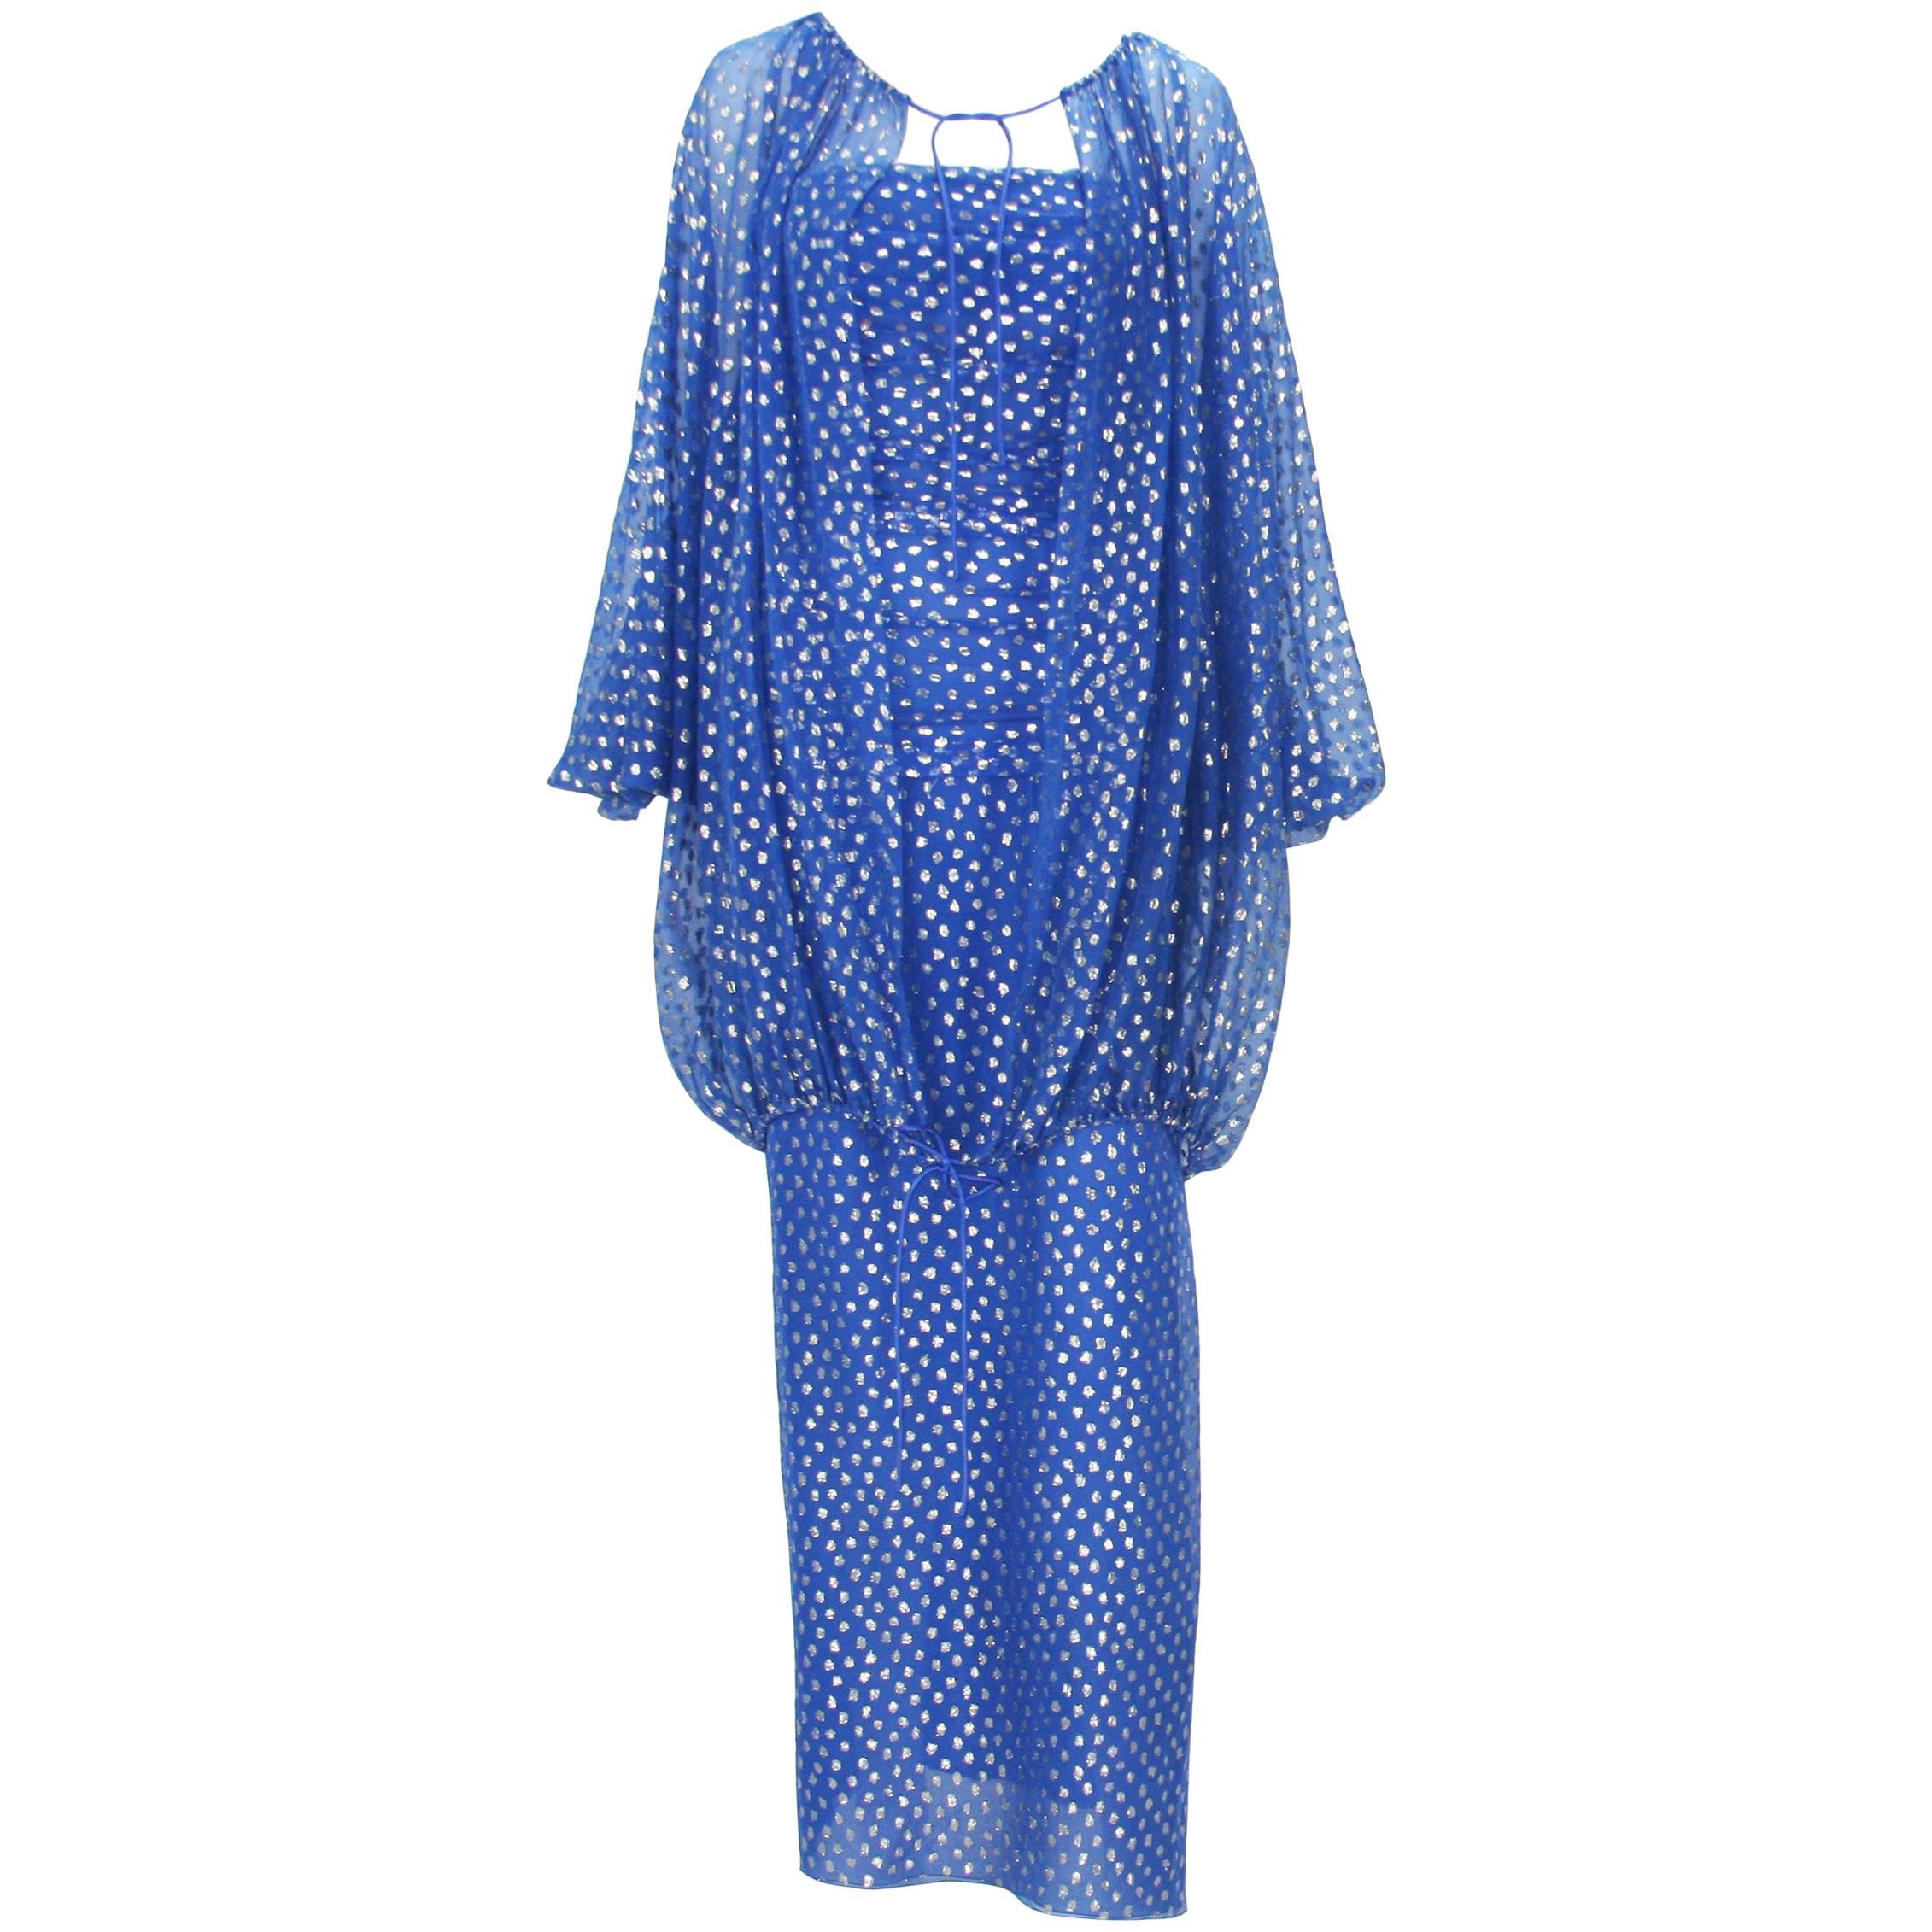 Christian Dior Paris F/W 1976 Numbered Polka Dot Blue Sheer Dress Set